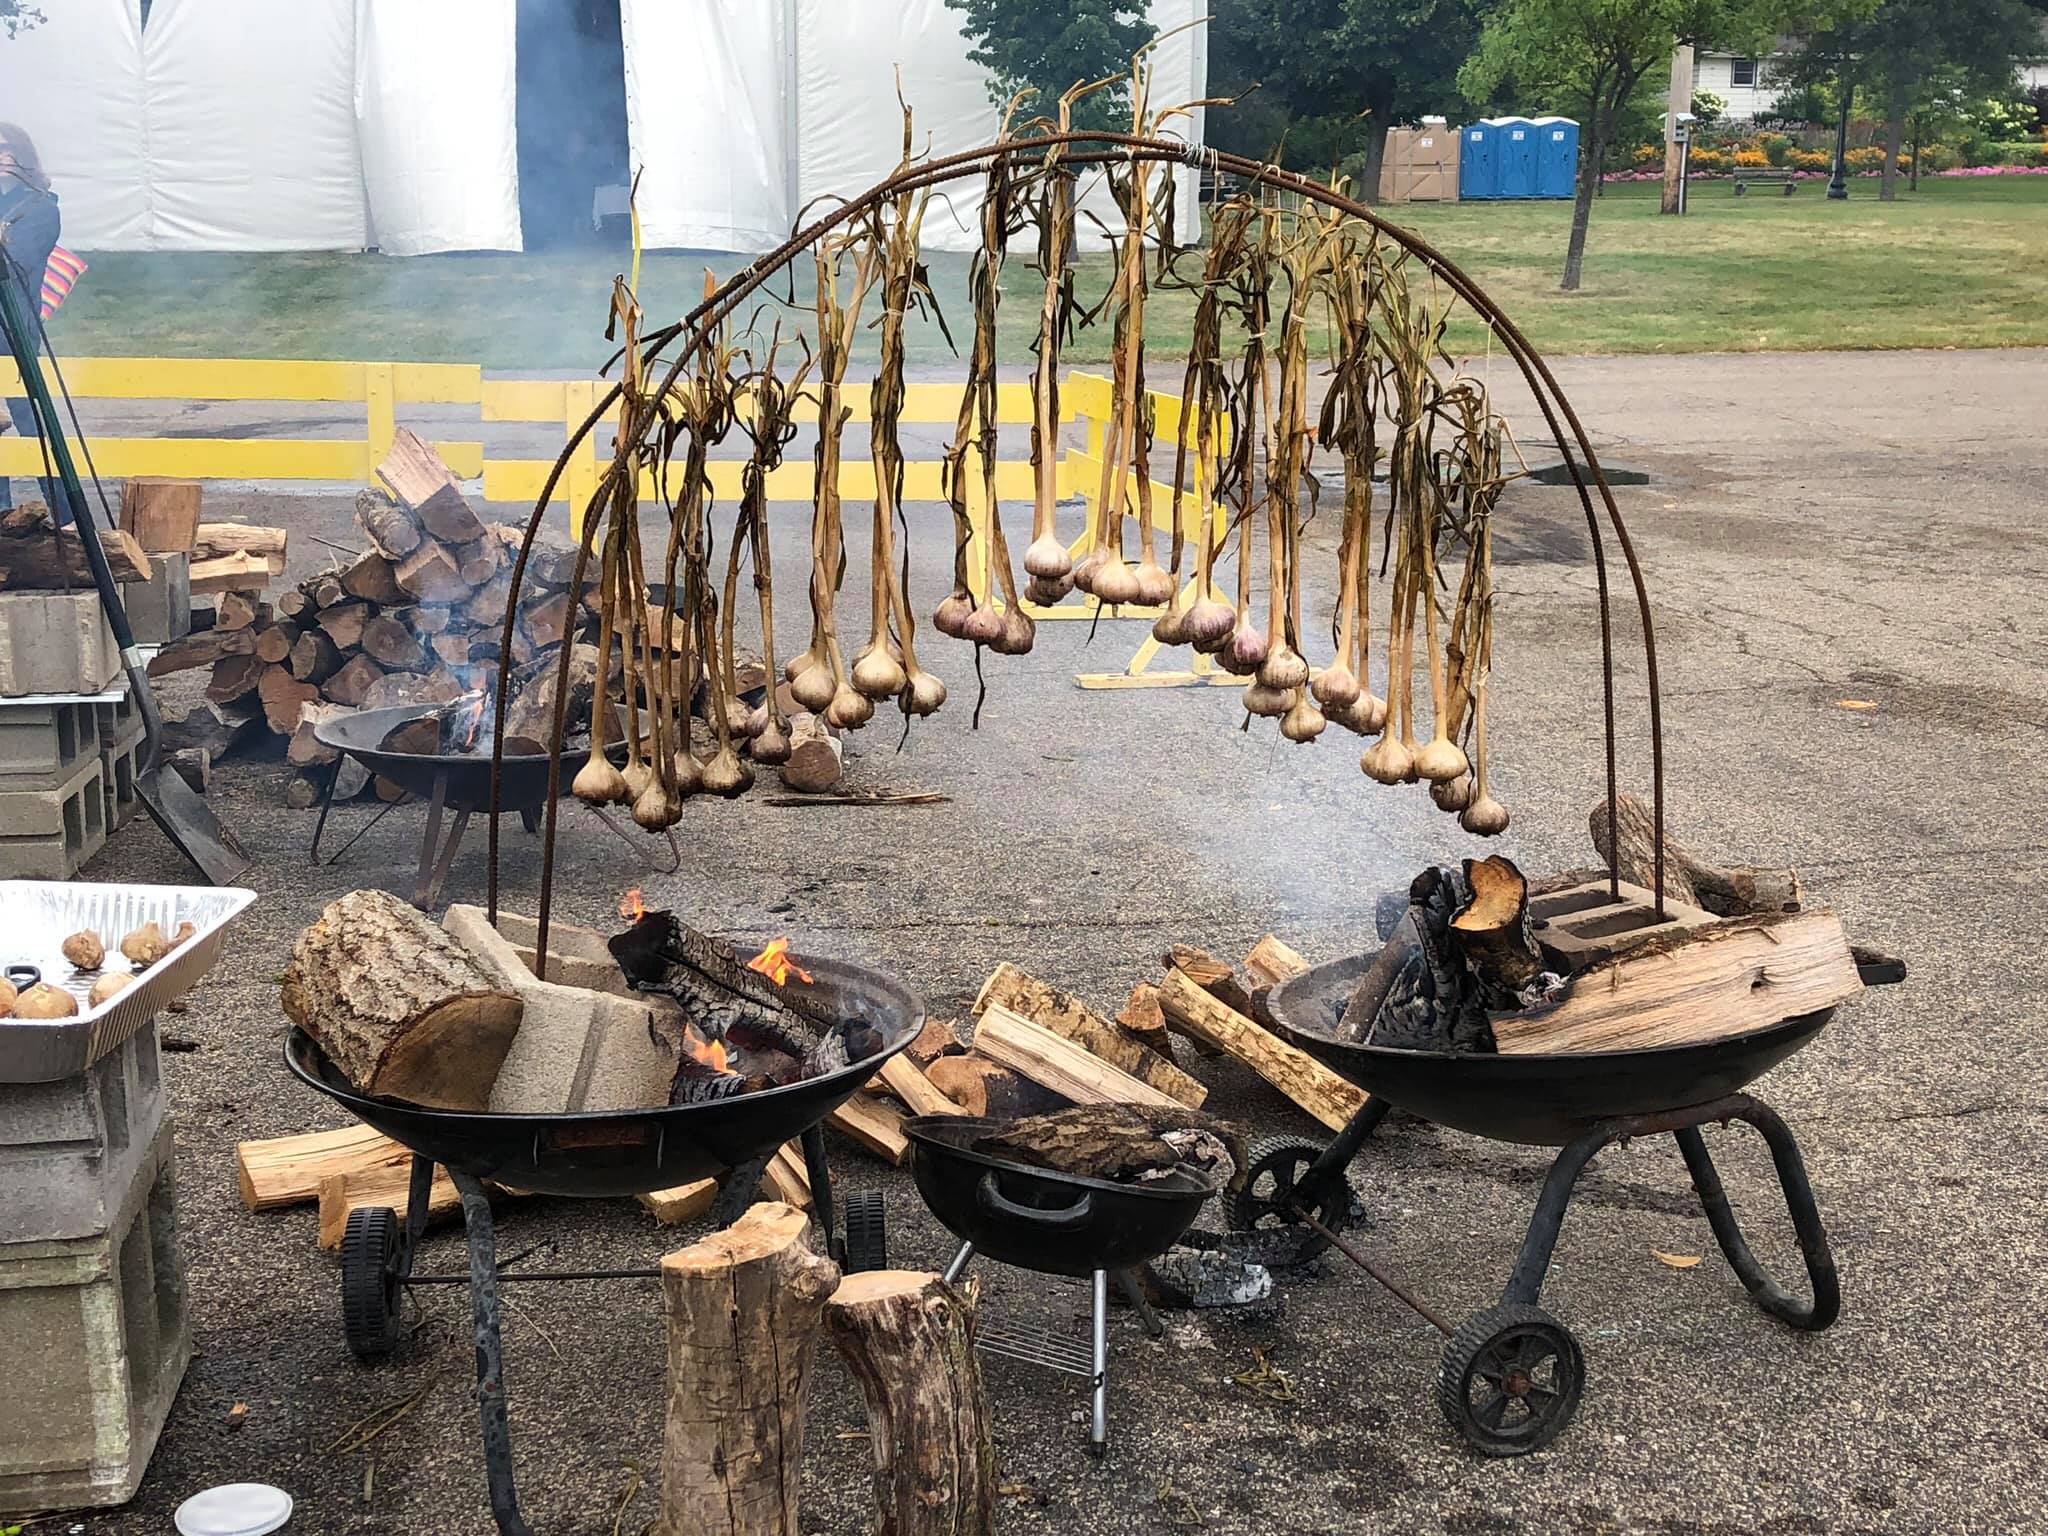 Roasting Garlic over open fire at Minnesota Garlic Festival.